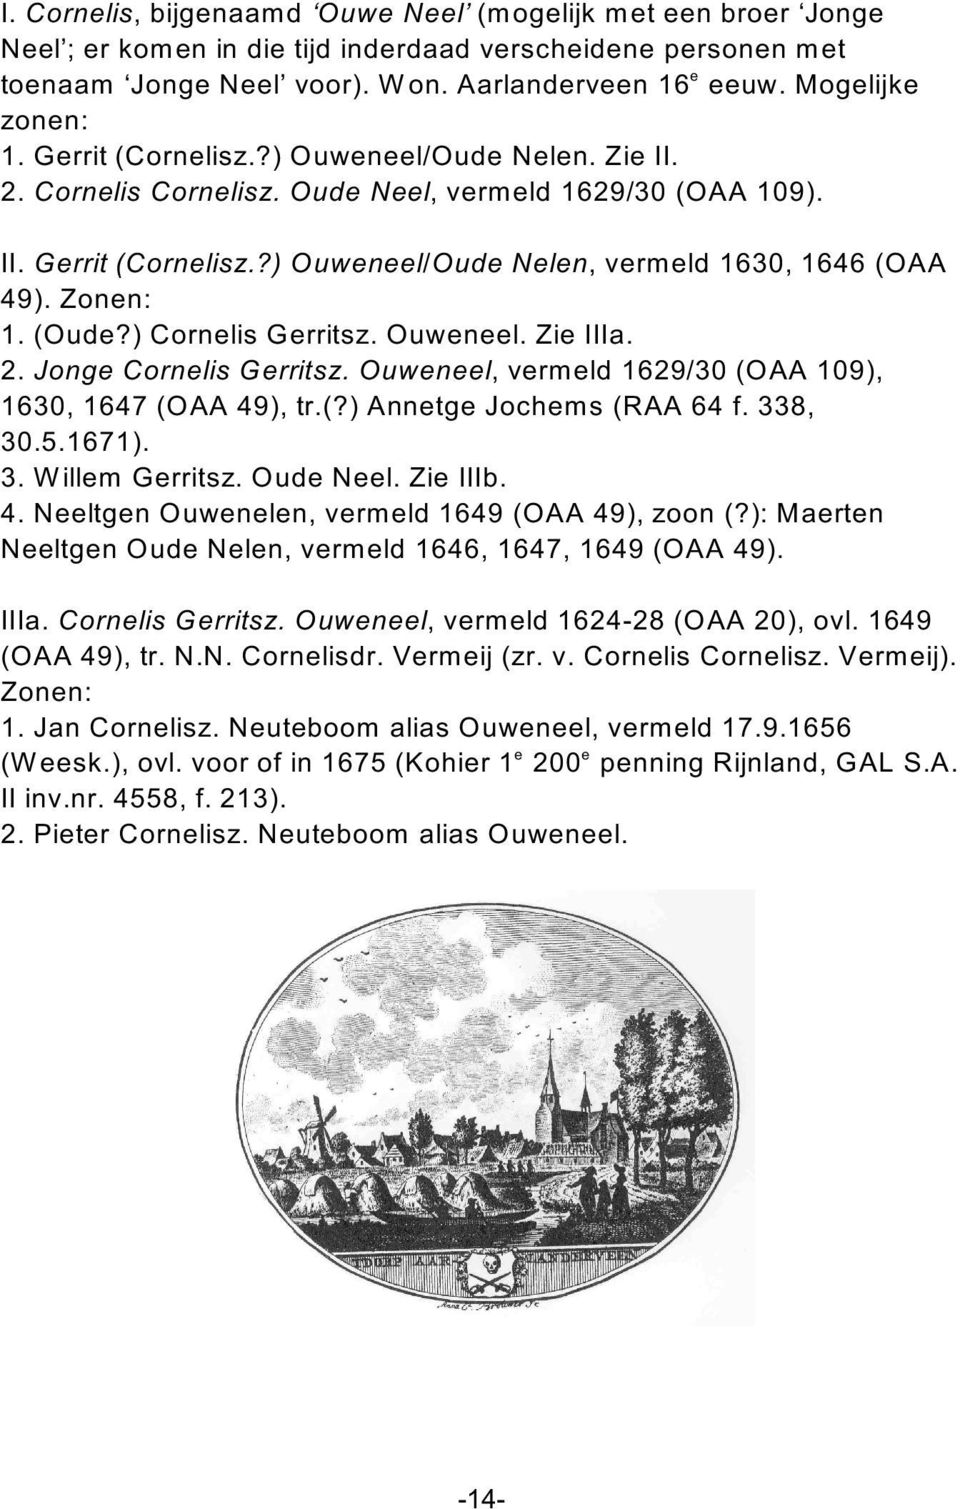 Zonen: 1. (Oude?) Cornelis Gerritsz. Ouweneel. Zie IIIa. 2. Jonge Cornelis Gerritsz. Ouweneel, vermeld 1629/30 (OAA 109), 1630, 1647 (OAA 49), tr.(?) Annetge Jochems (RAA 64 f. 338, 30.5.1671). 3. W illem Gerritsz.